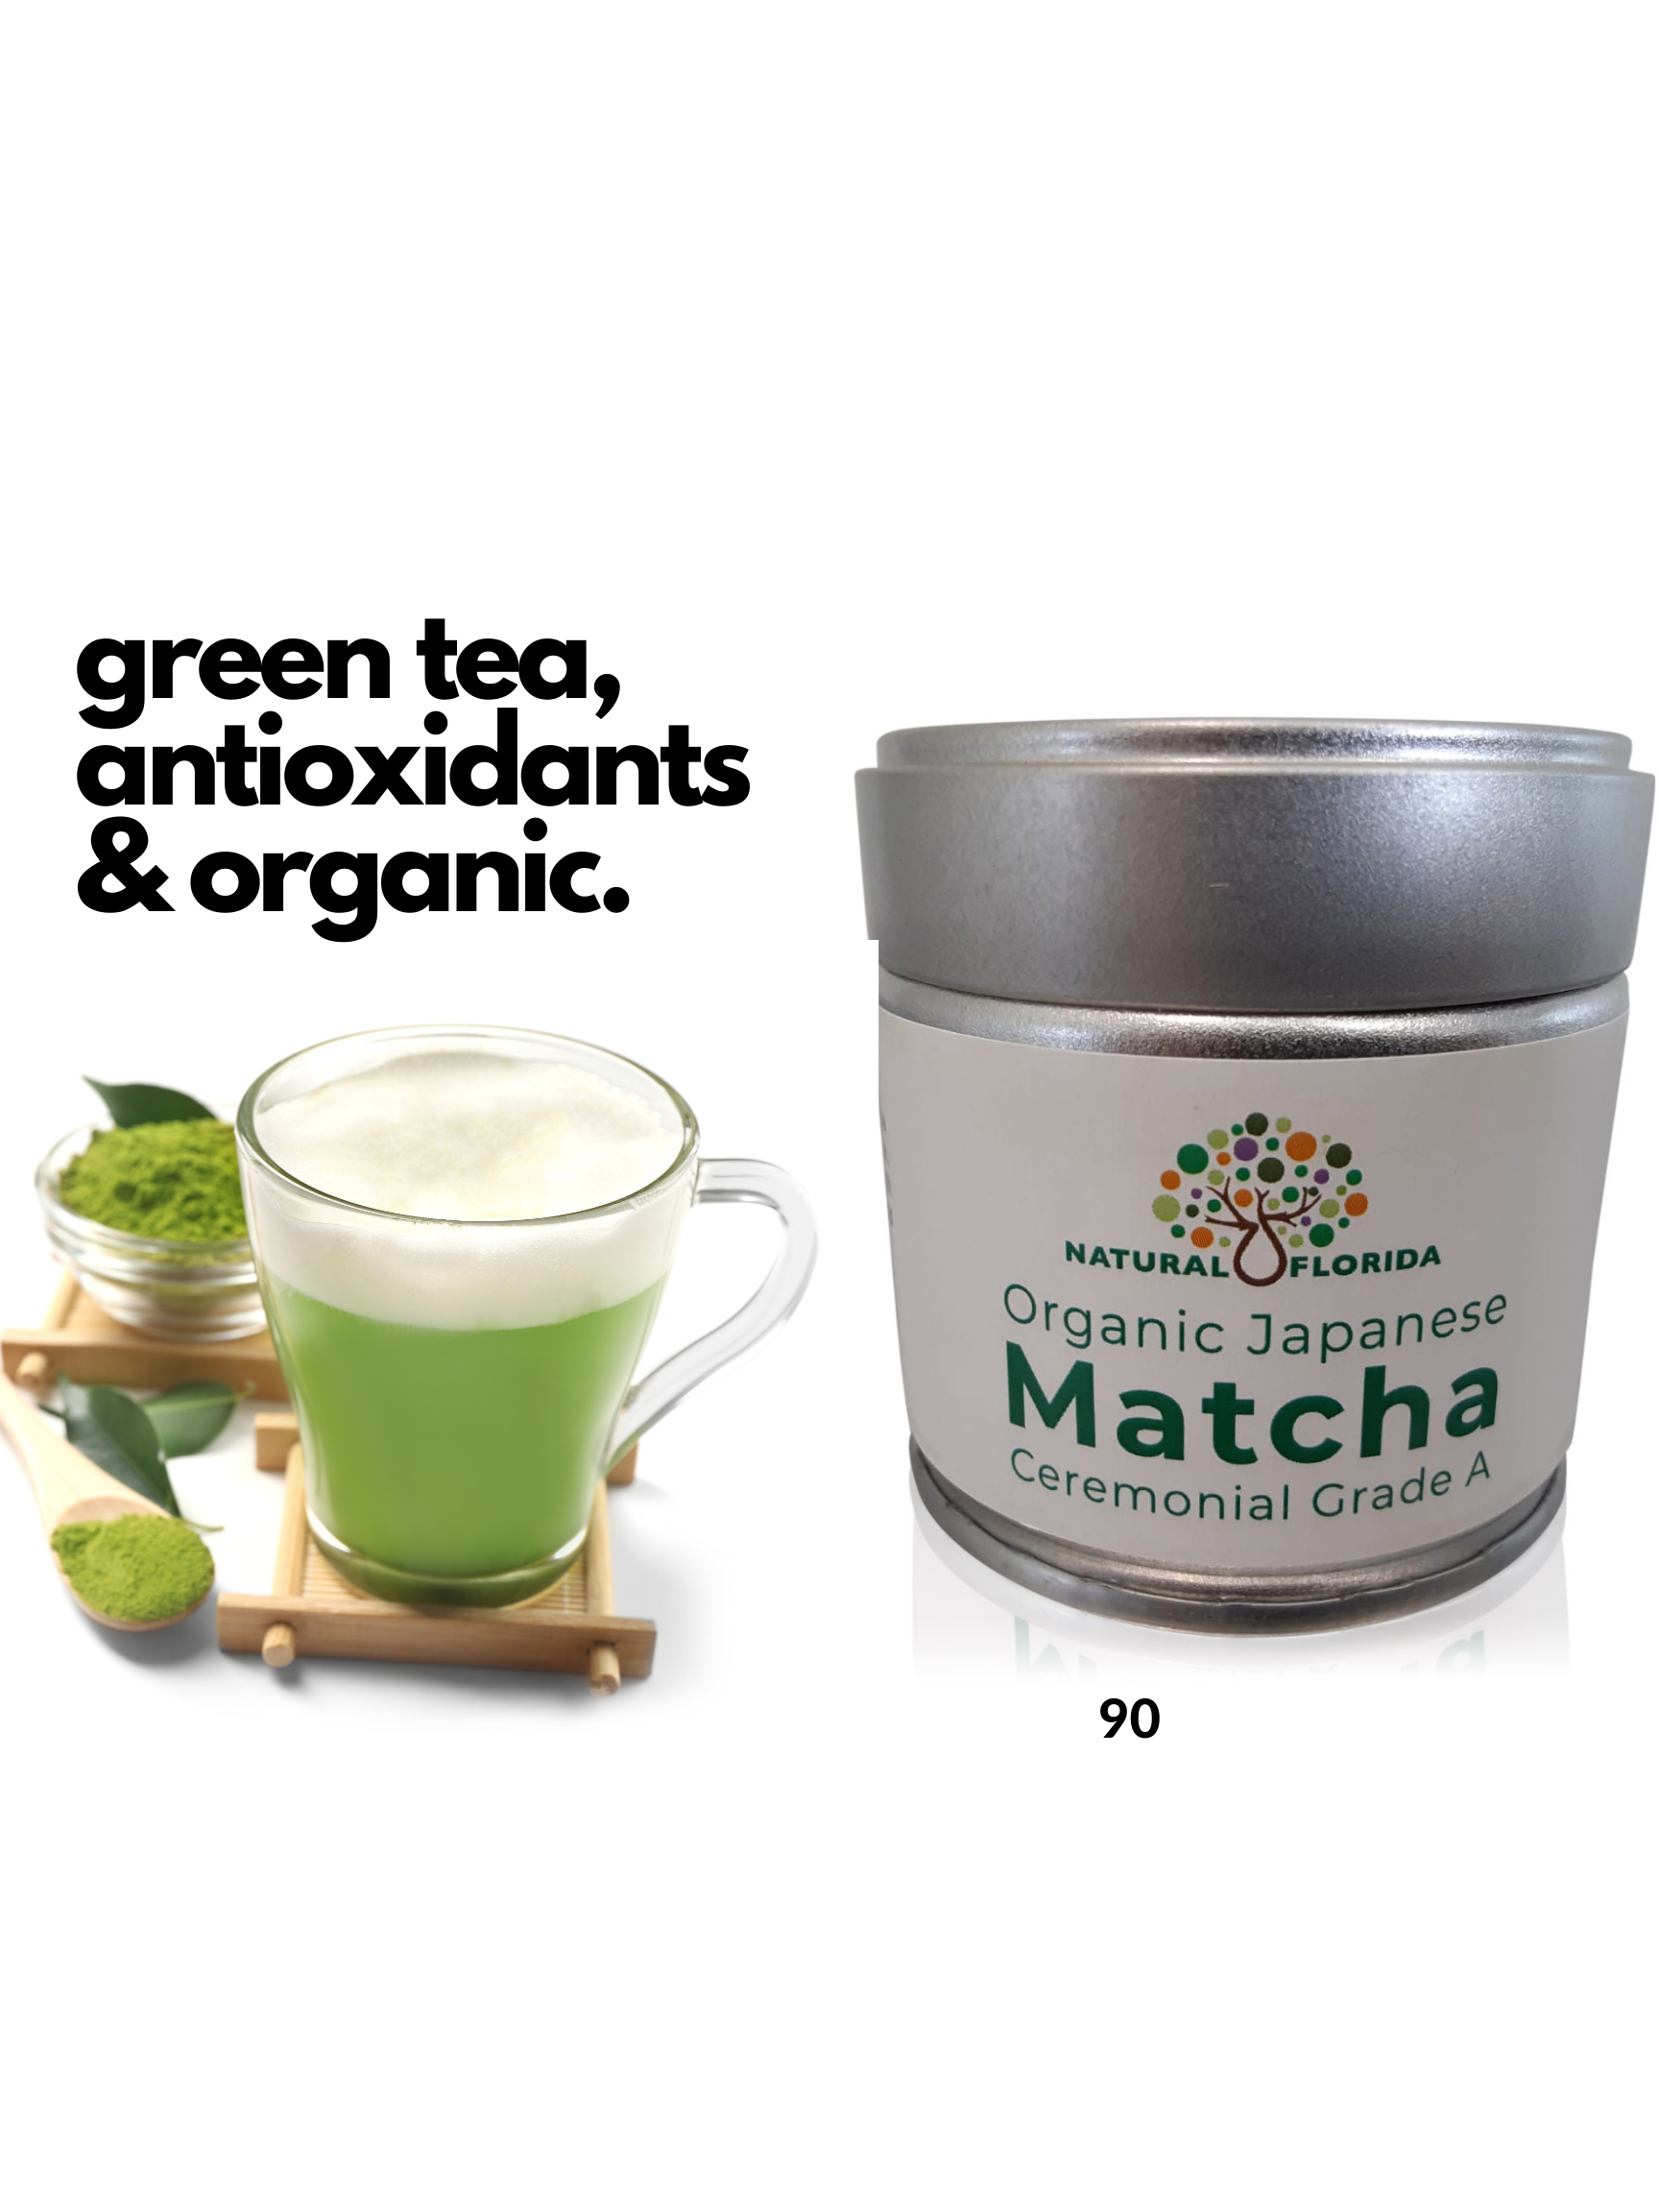 Matcha Ceremonial Grade Tea. Organic. Vegan. nonGMO. FREE Shipping. Natural Florida quality